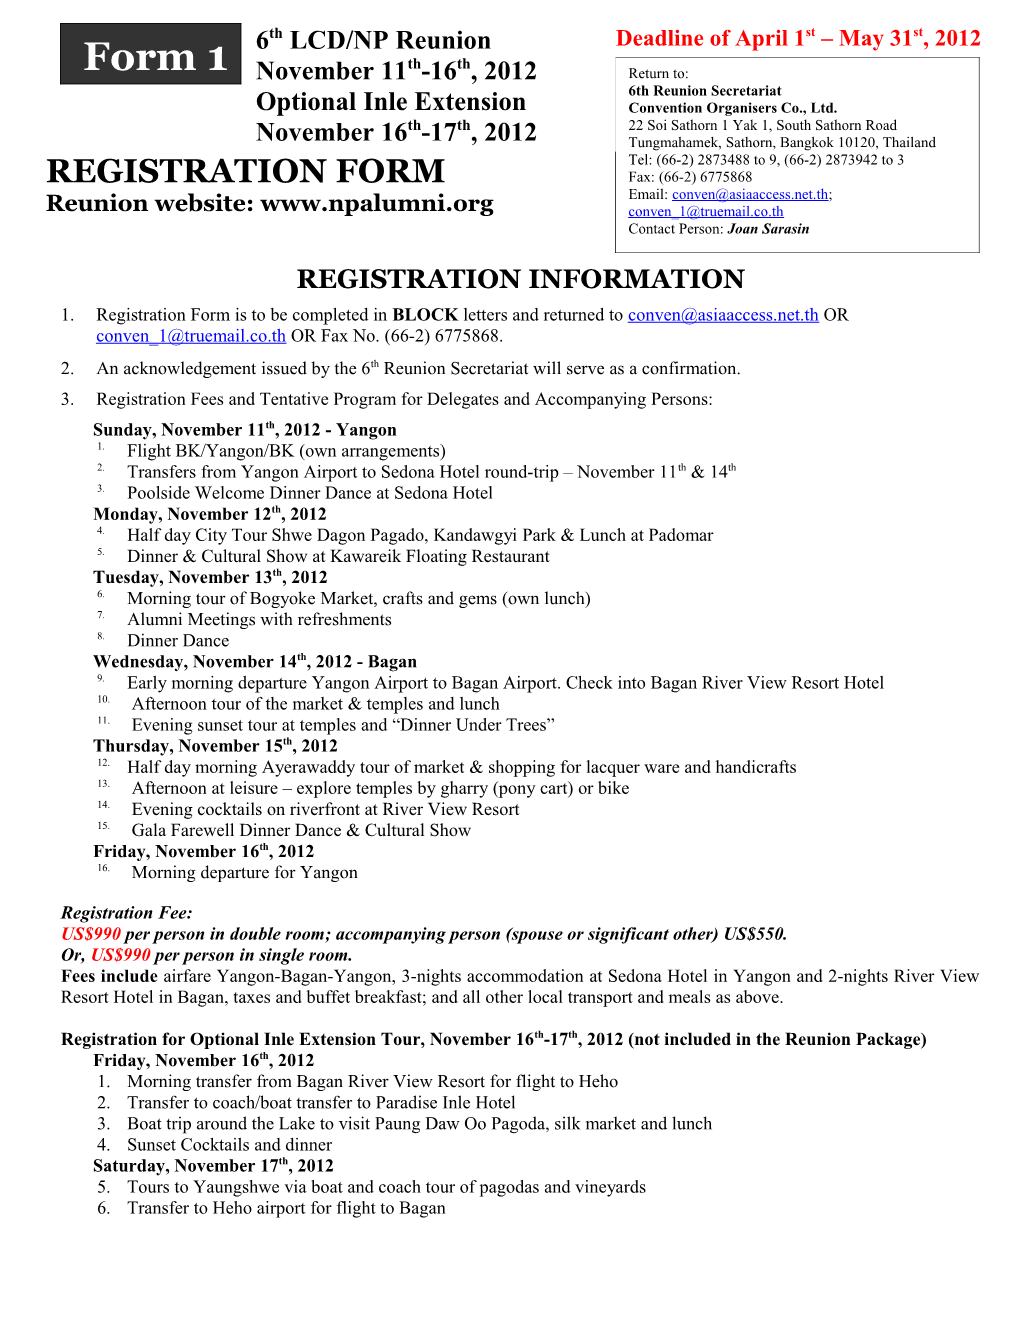 Registration Information s3